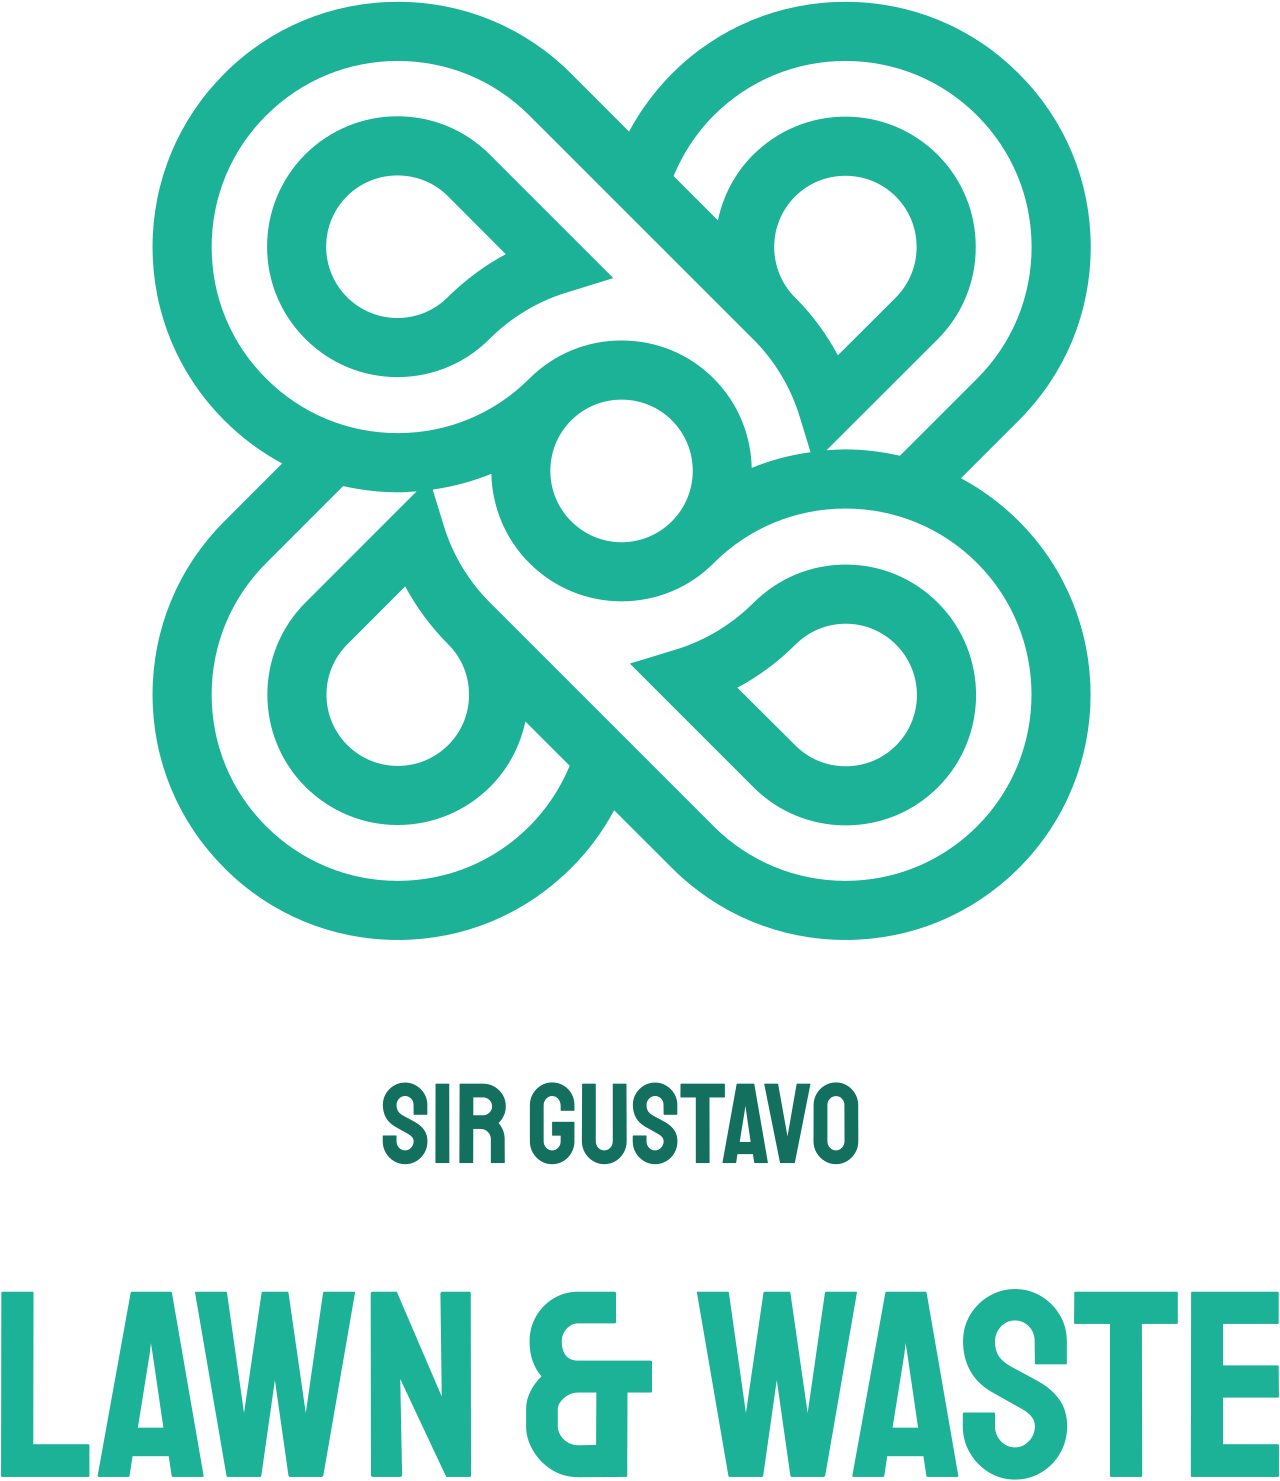 Sir Gustavo Lawn & Waste's web page